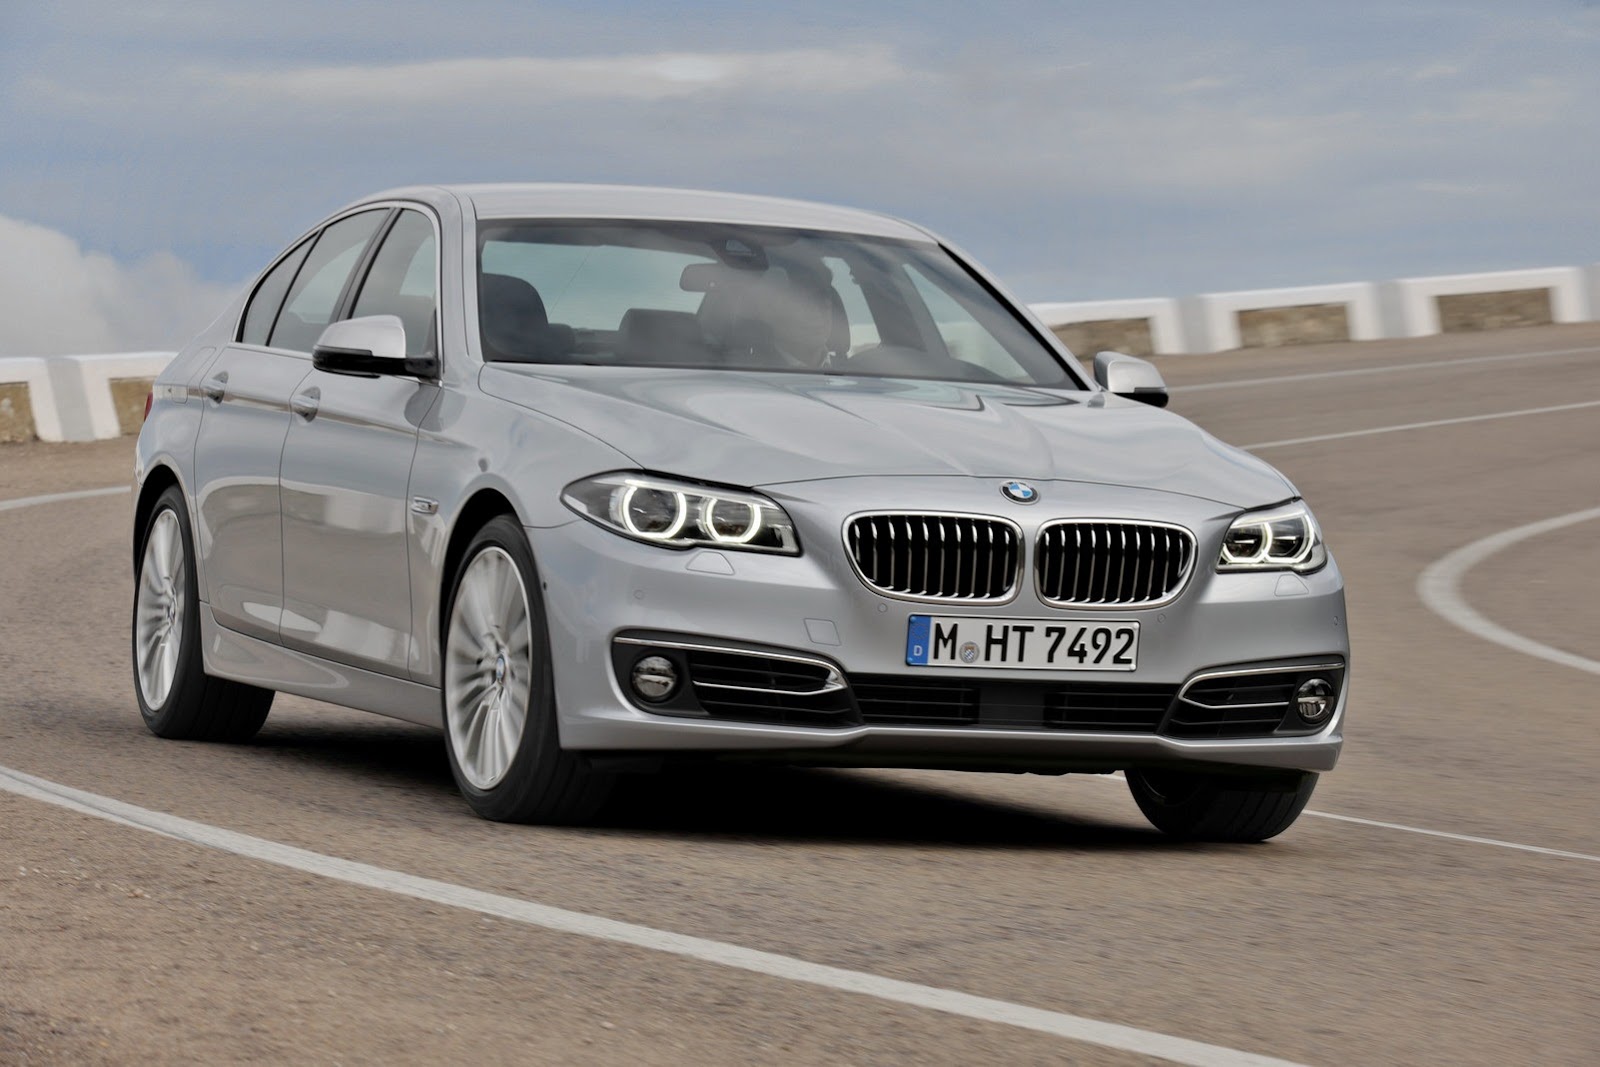 Decimale concept Lol BMW 5-Series Diesel Pricing Revealed, Undercuts ActiveHybrid 5